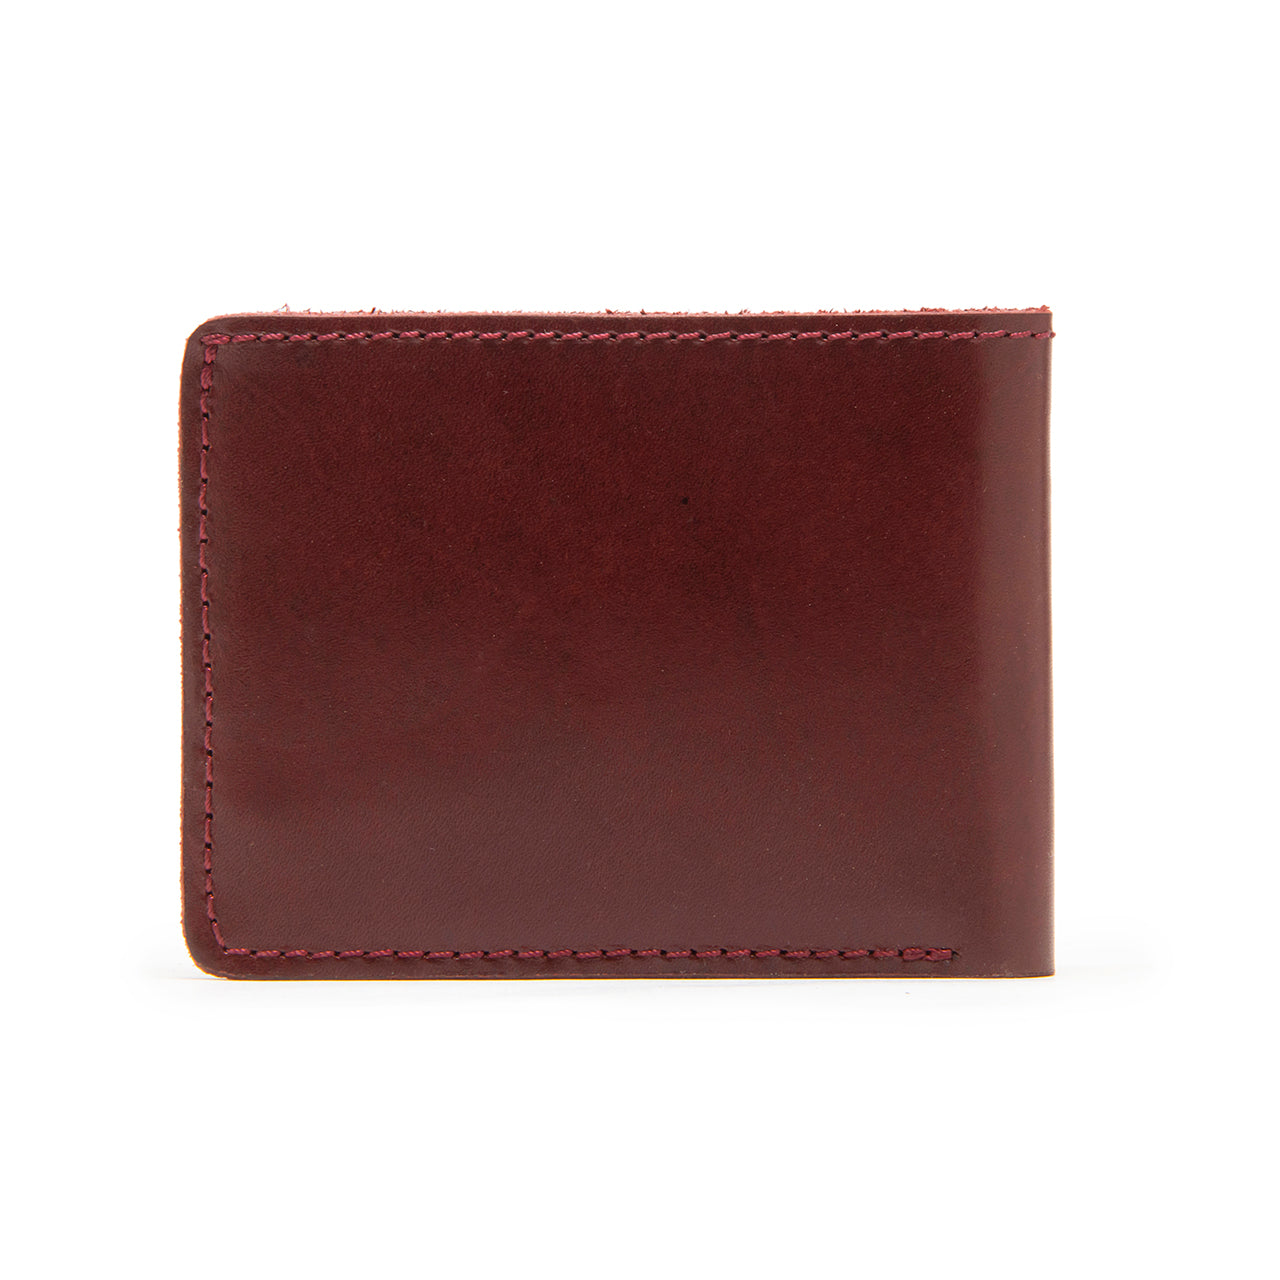 Bifold Leather Wallet | Various Colors - Quavaro